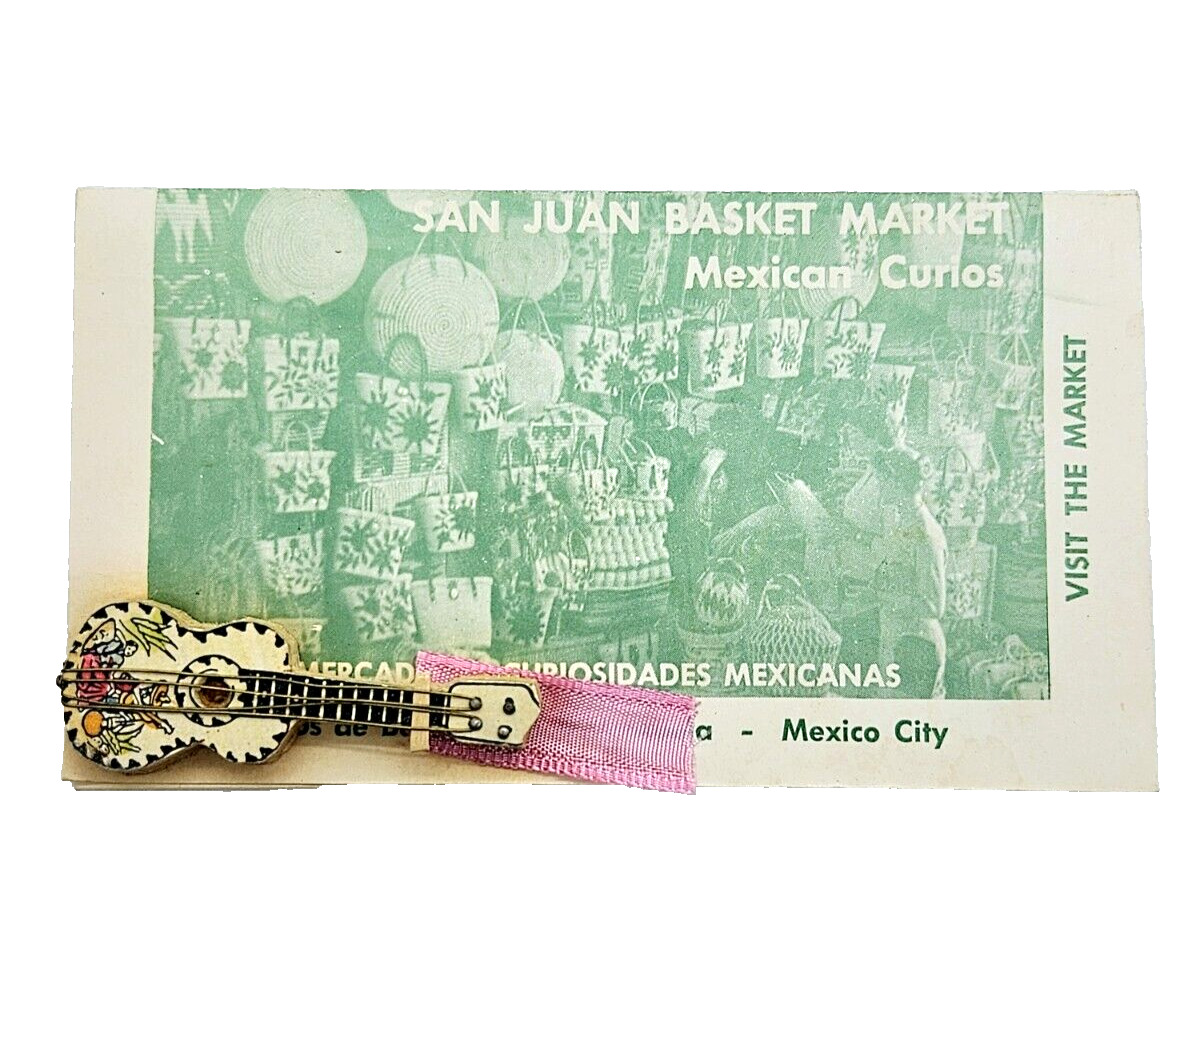 Vintage Mexico San Juan basket market curio shopping map mini guitar 1960\'s